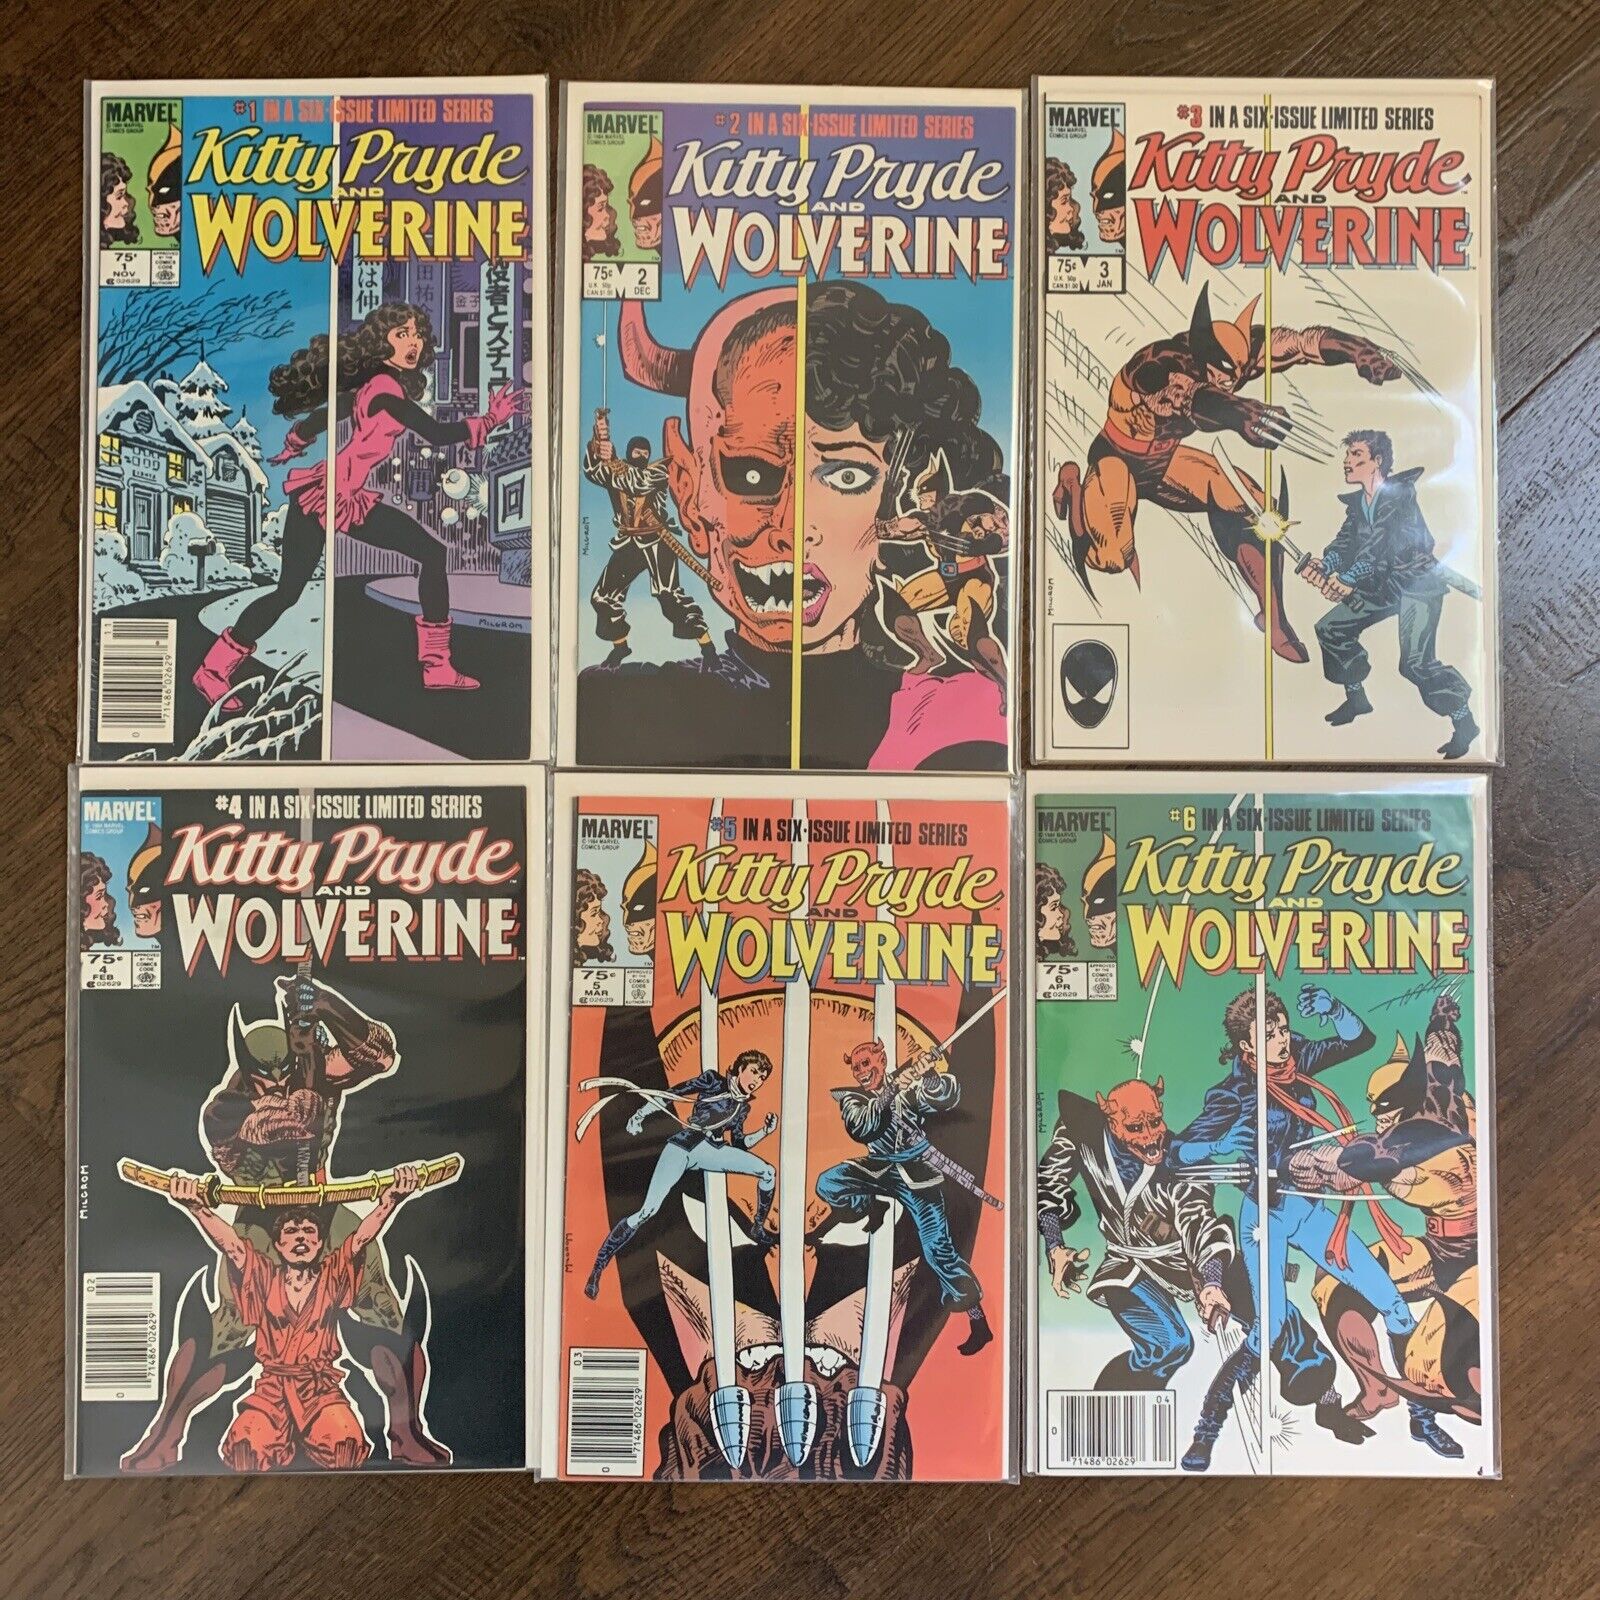 Kitty Pride & Wolverine # 1 2 3 4 5 6 1-6 Full Series Marvel Comics FN/VF